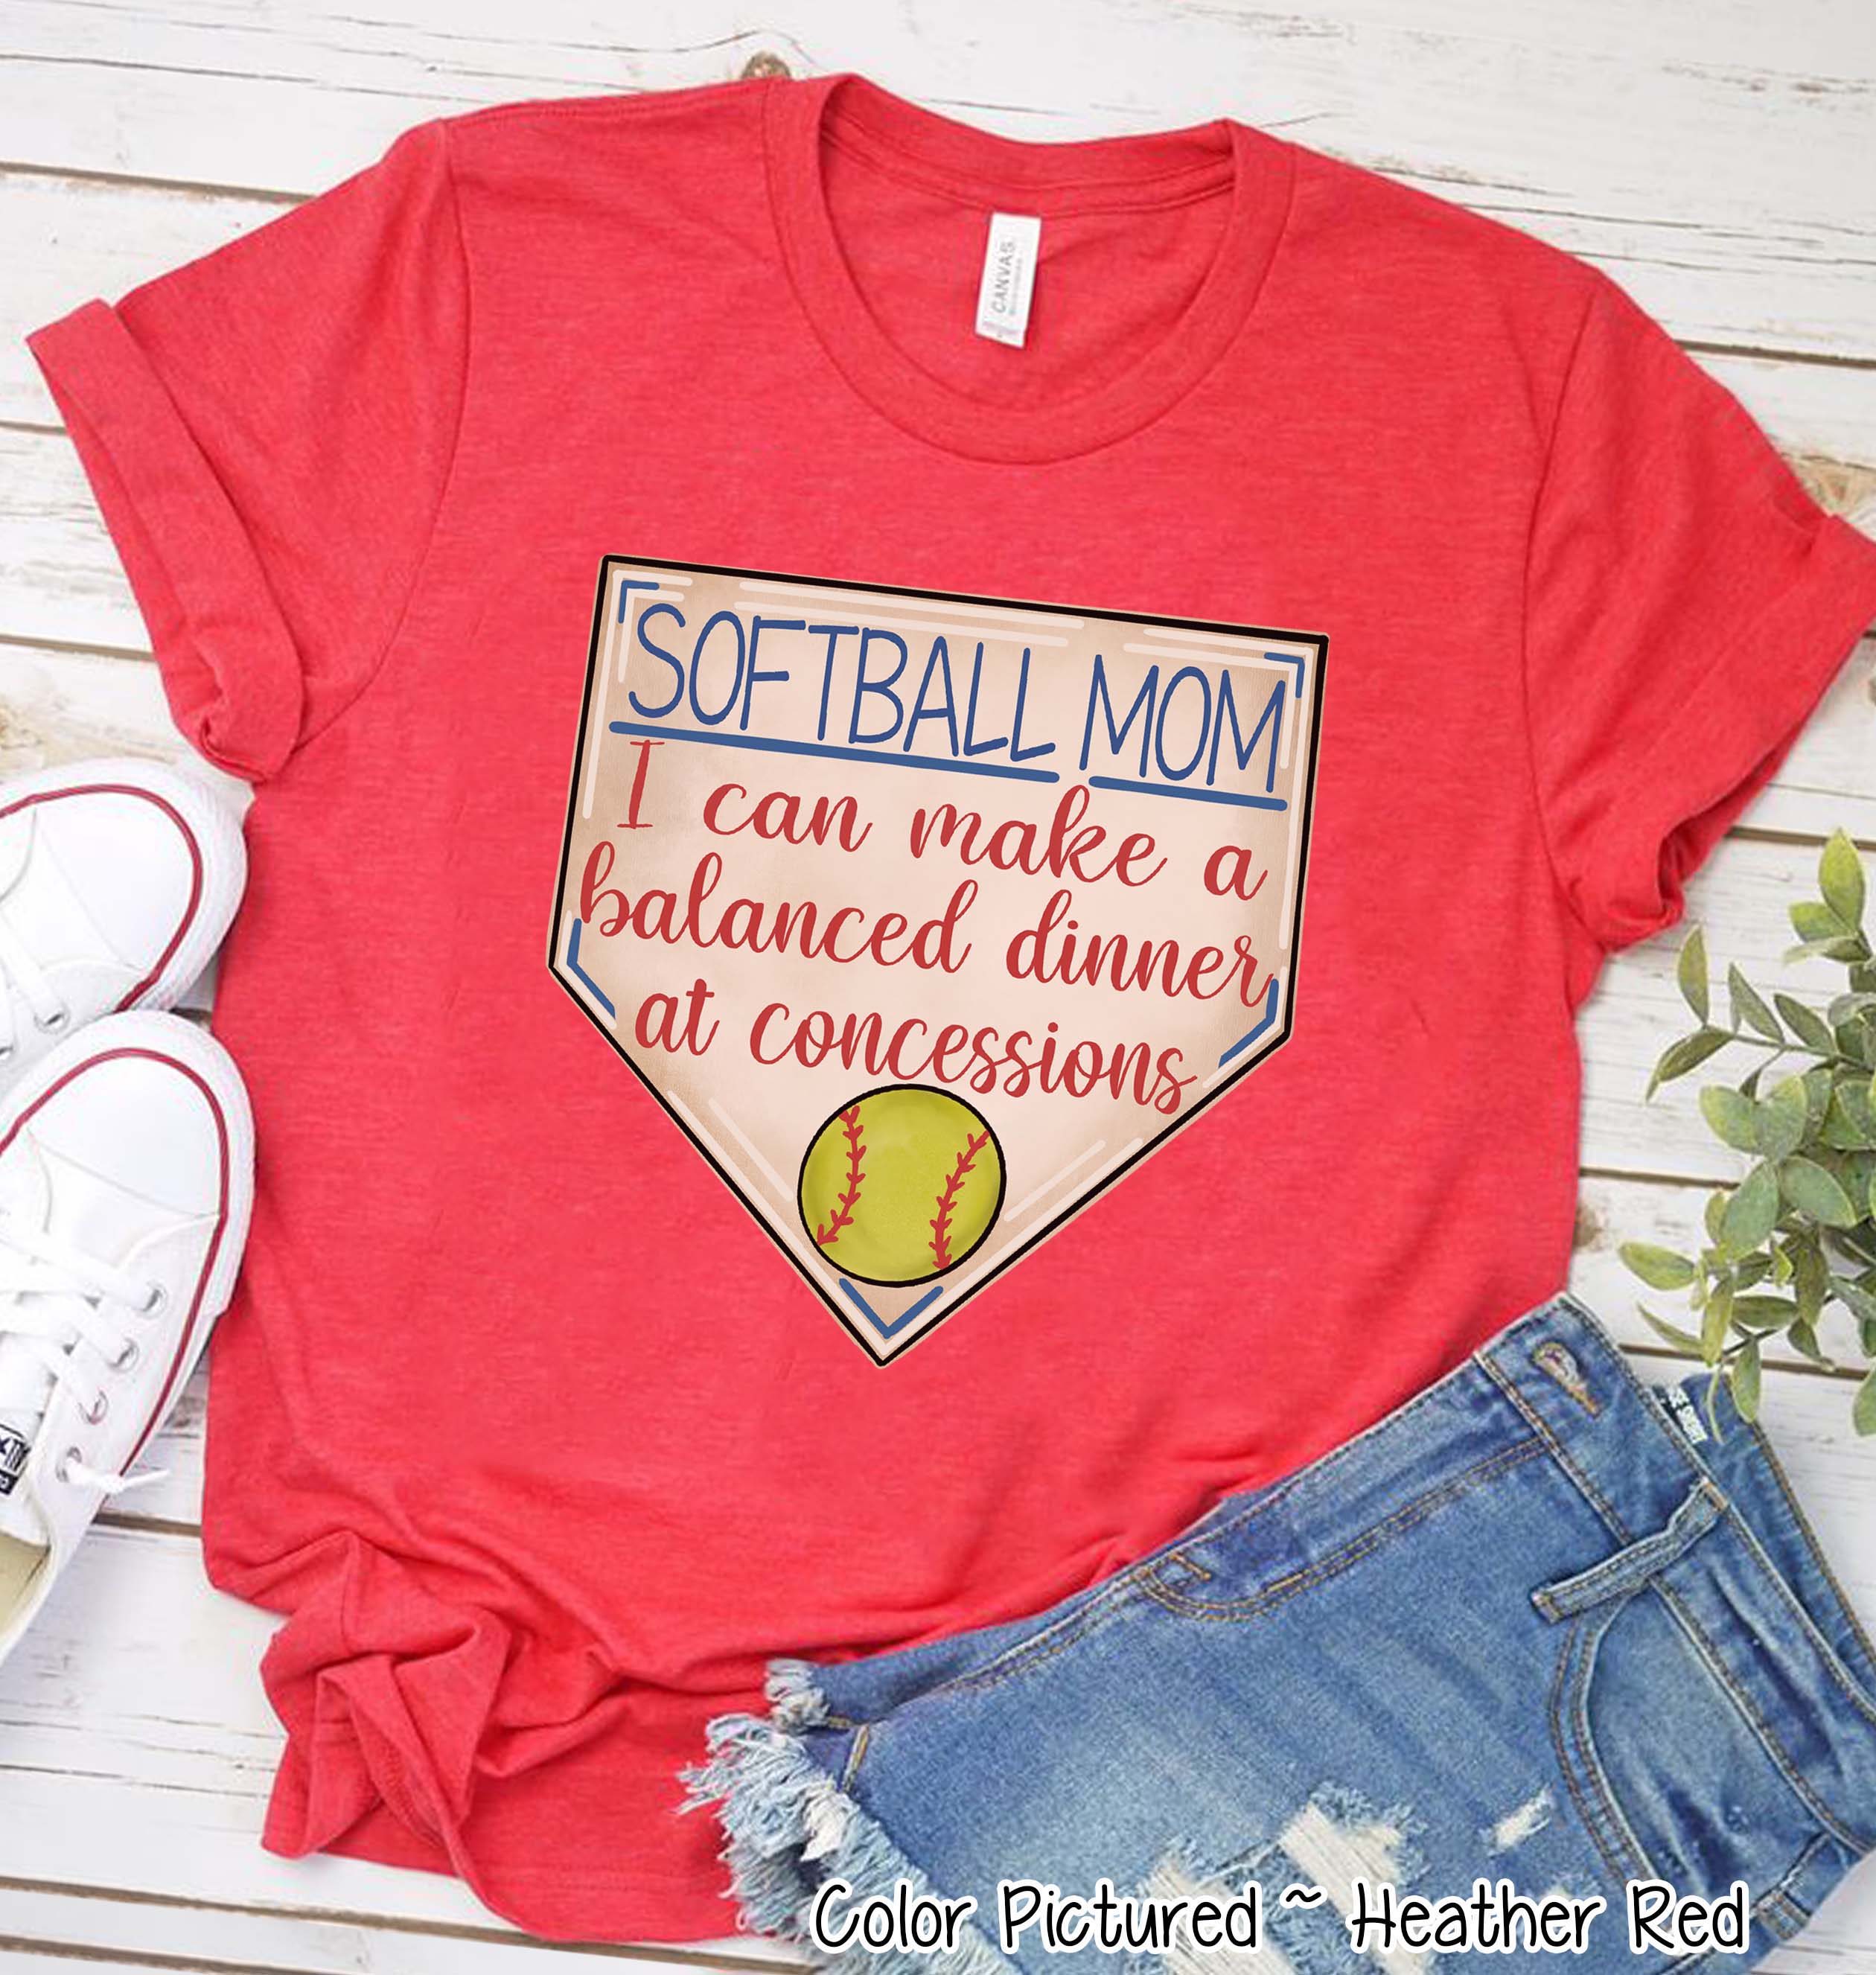 Softball Mom I Can Make a Balanced Dinner at Concessions Tee